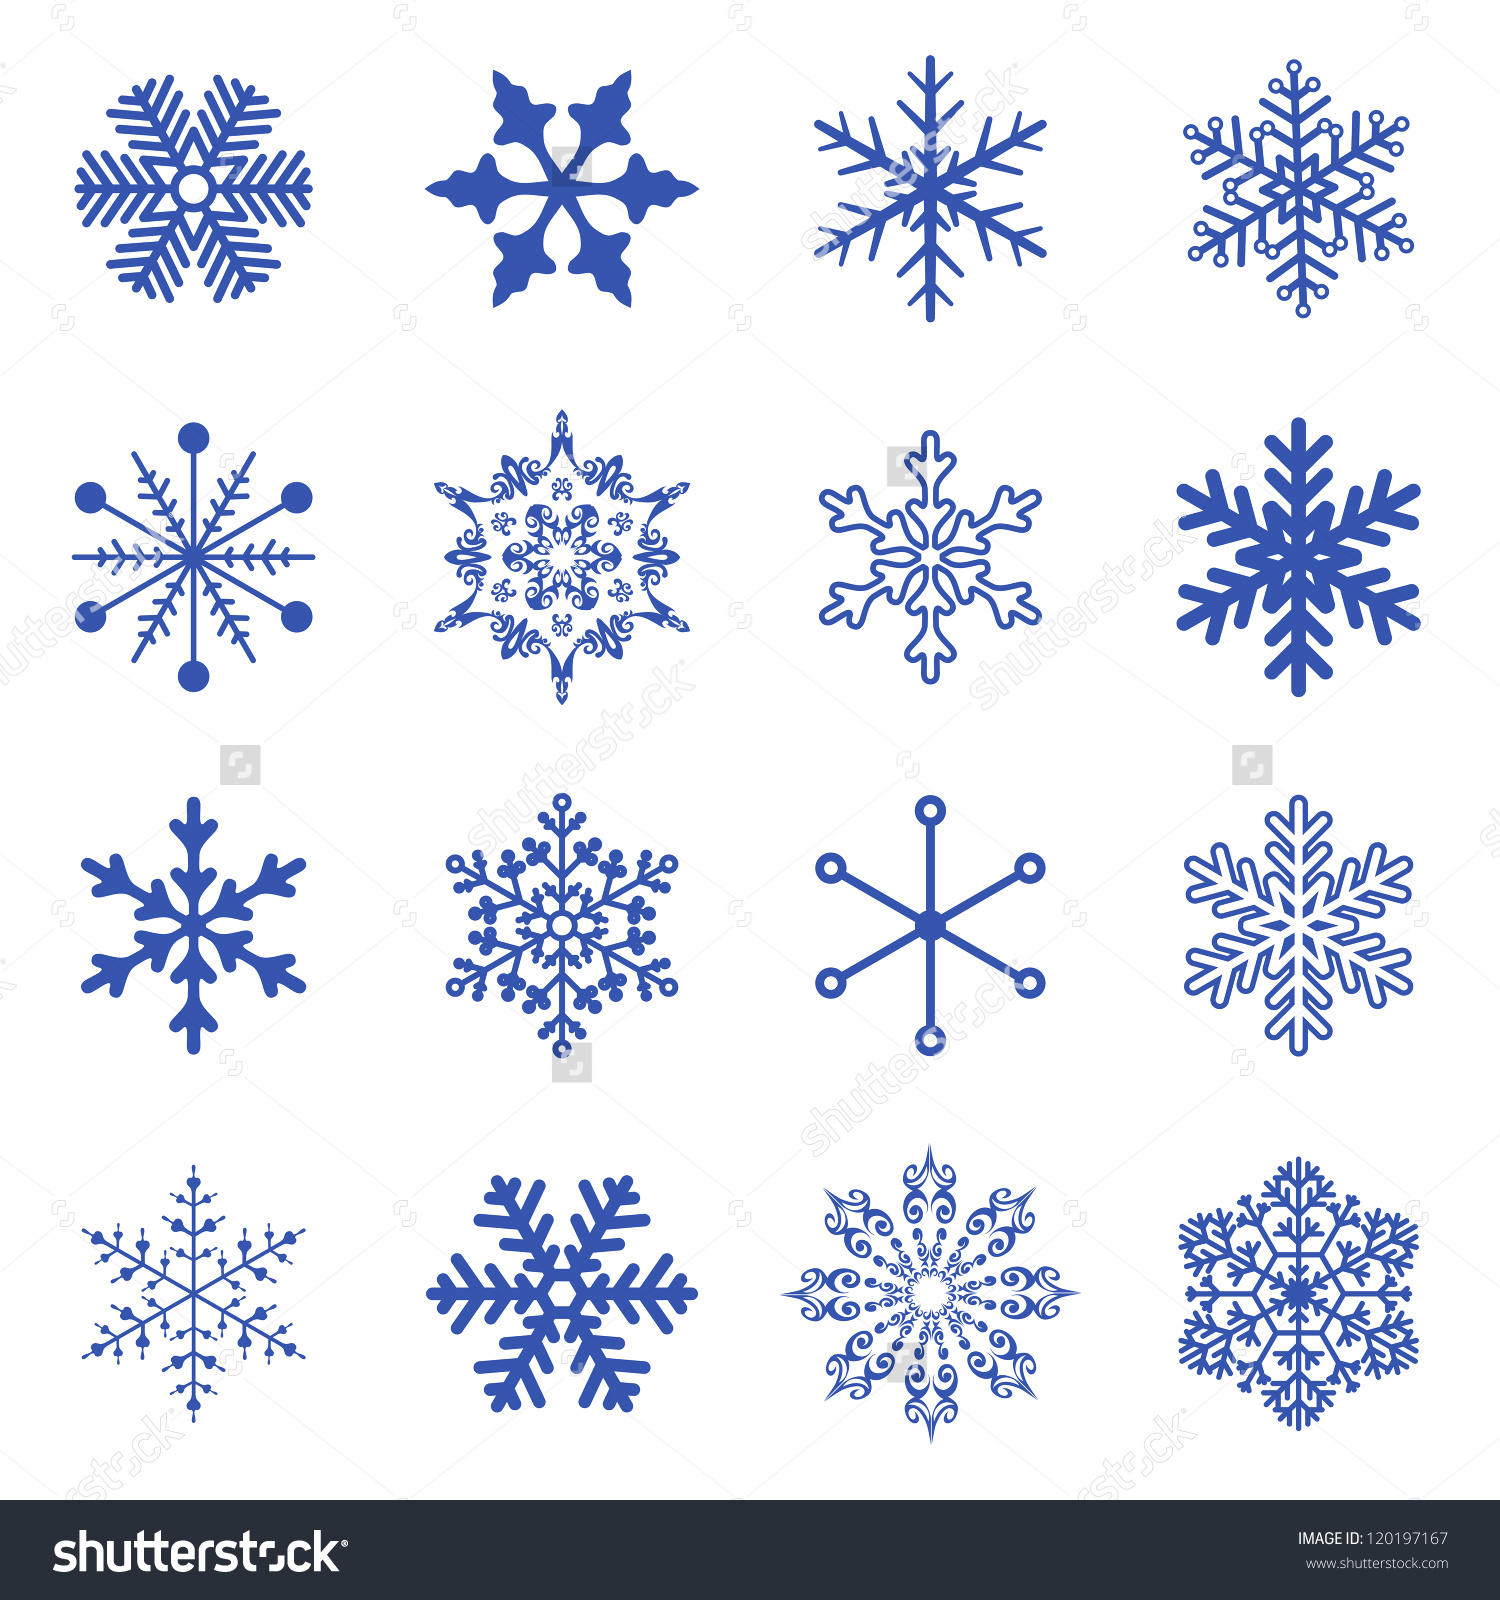 snowflake inkscape tutorial